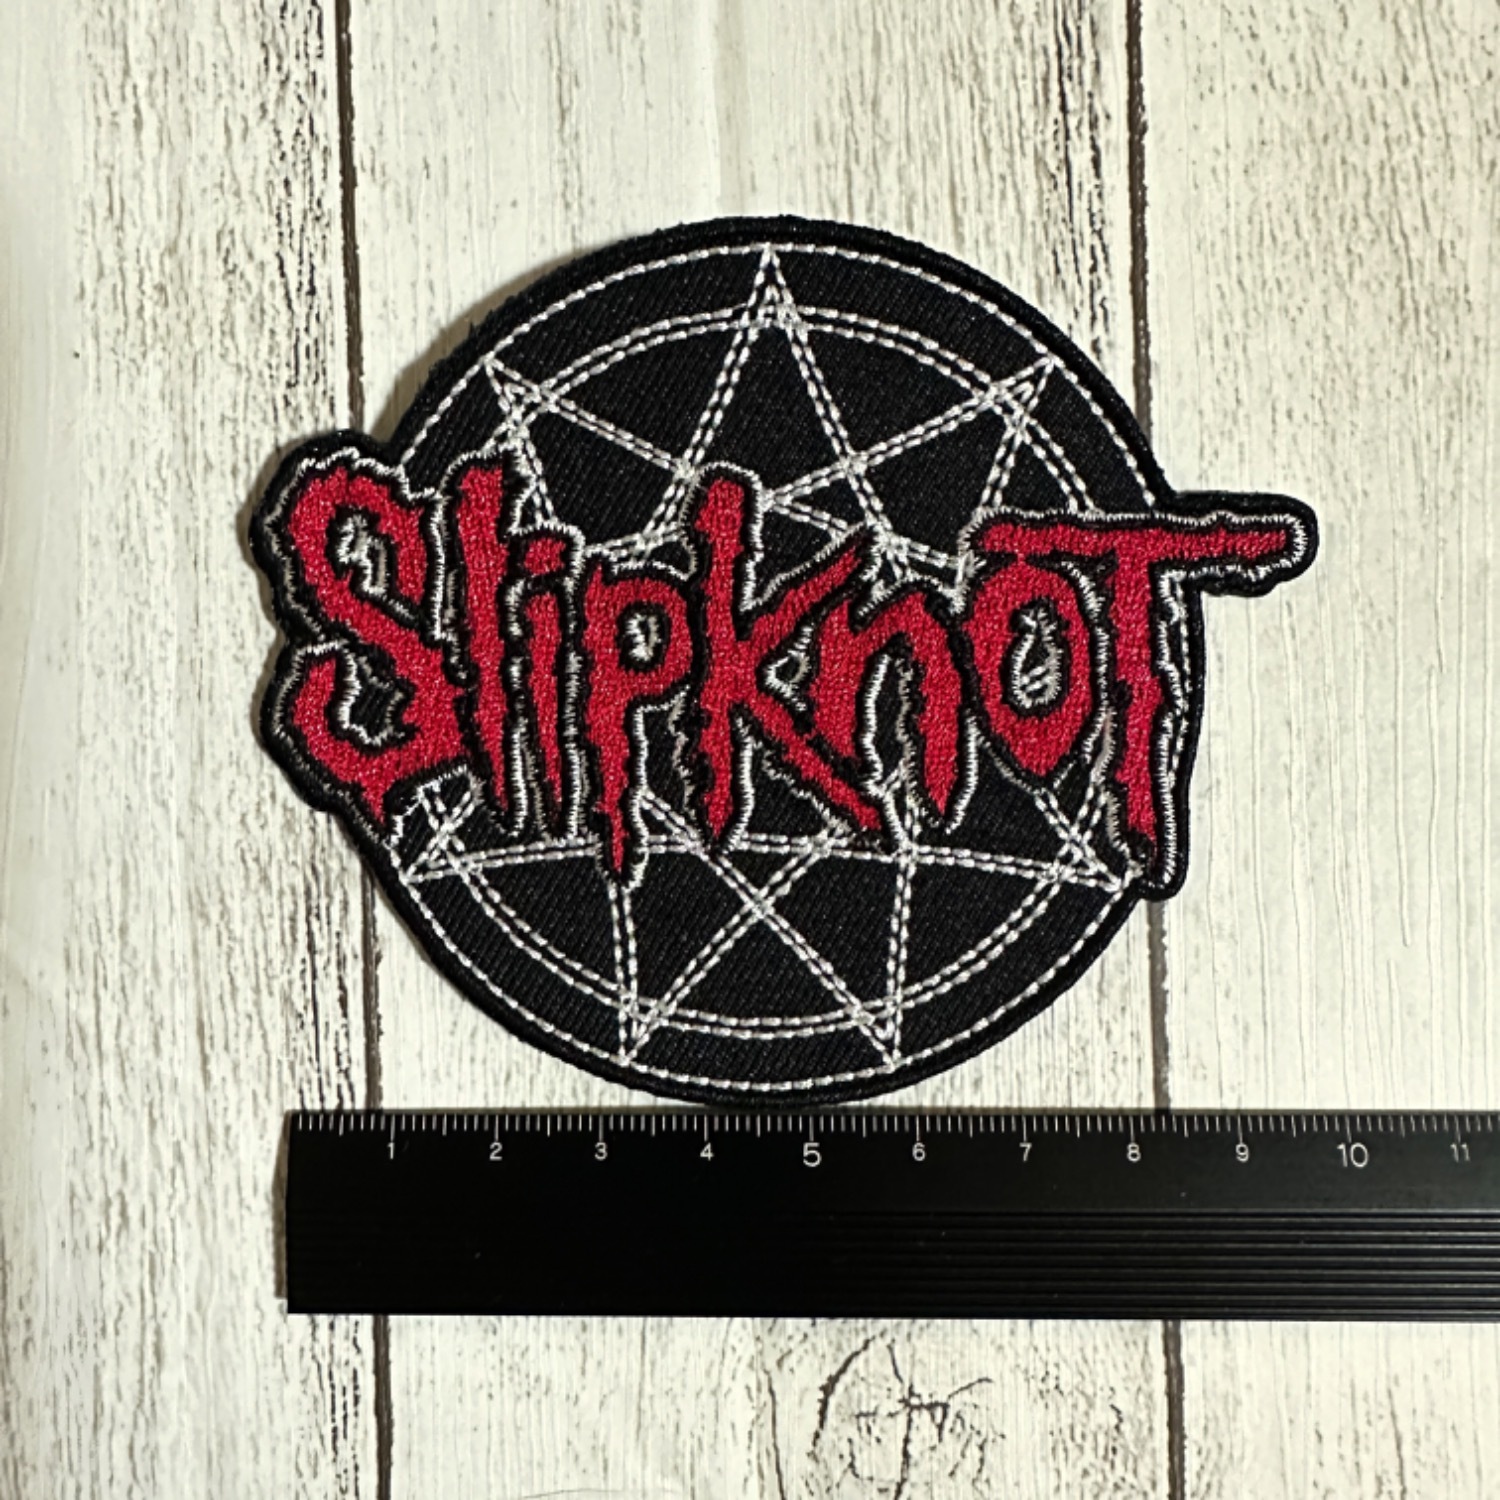 【Patch】Slipknot - LOGO OVER NONOGRAM 【Small Patch】